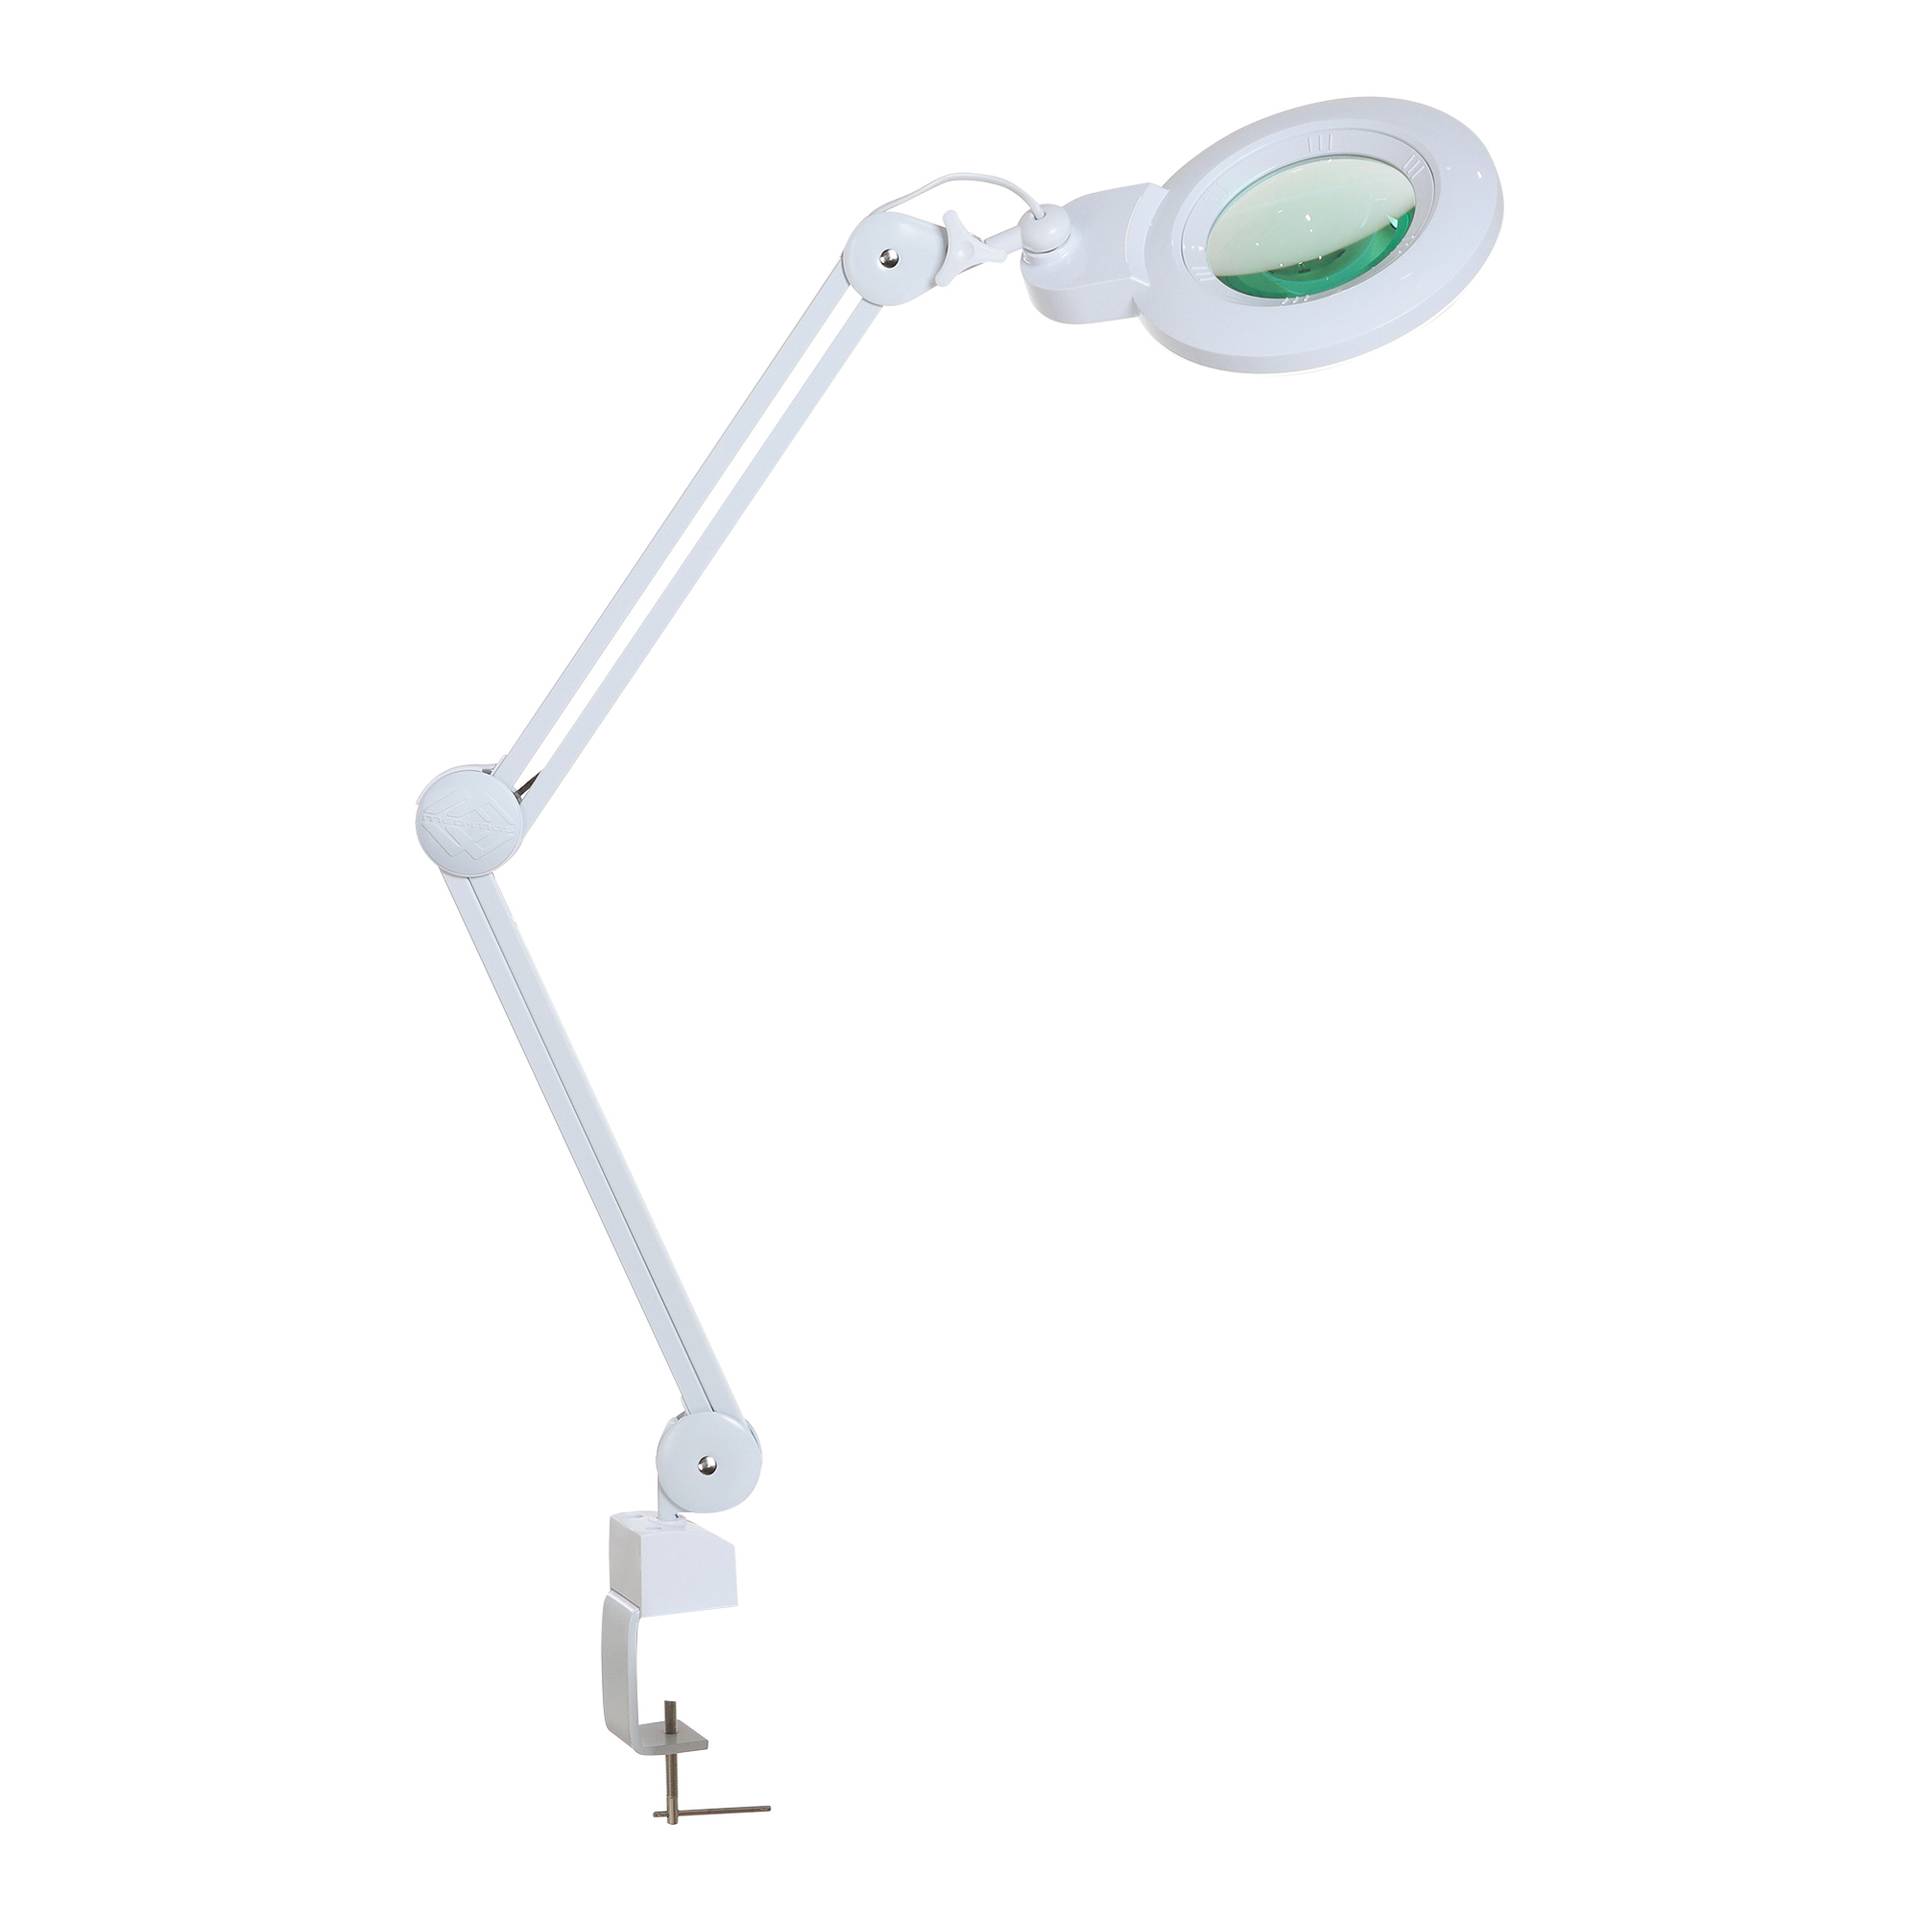 Лампа бестеневая с РУ (лампа-лупа) Med-Mos 9006LED (9006LED-D-127), многофункциональная, со съёмной линзой